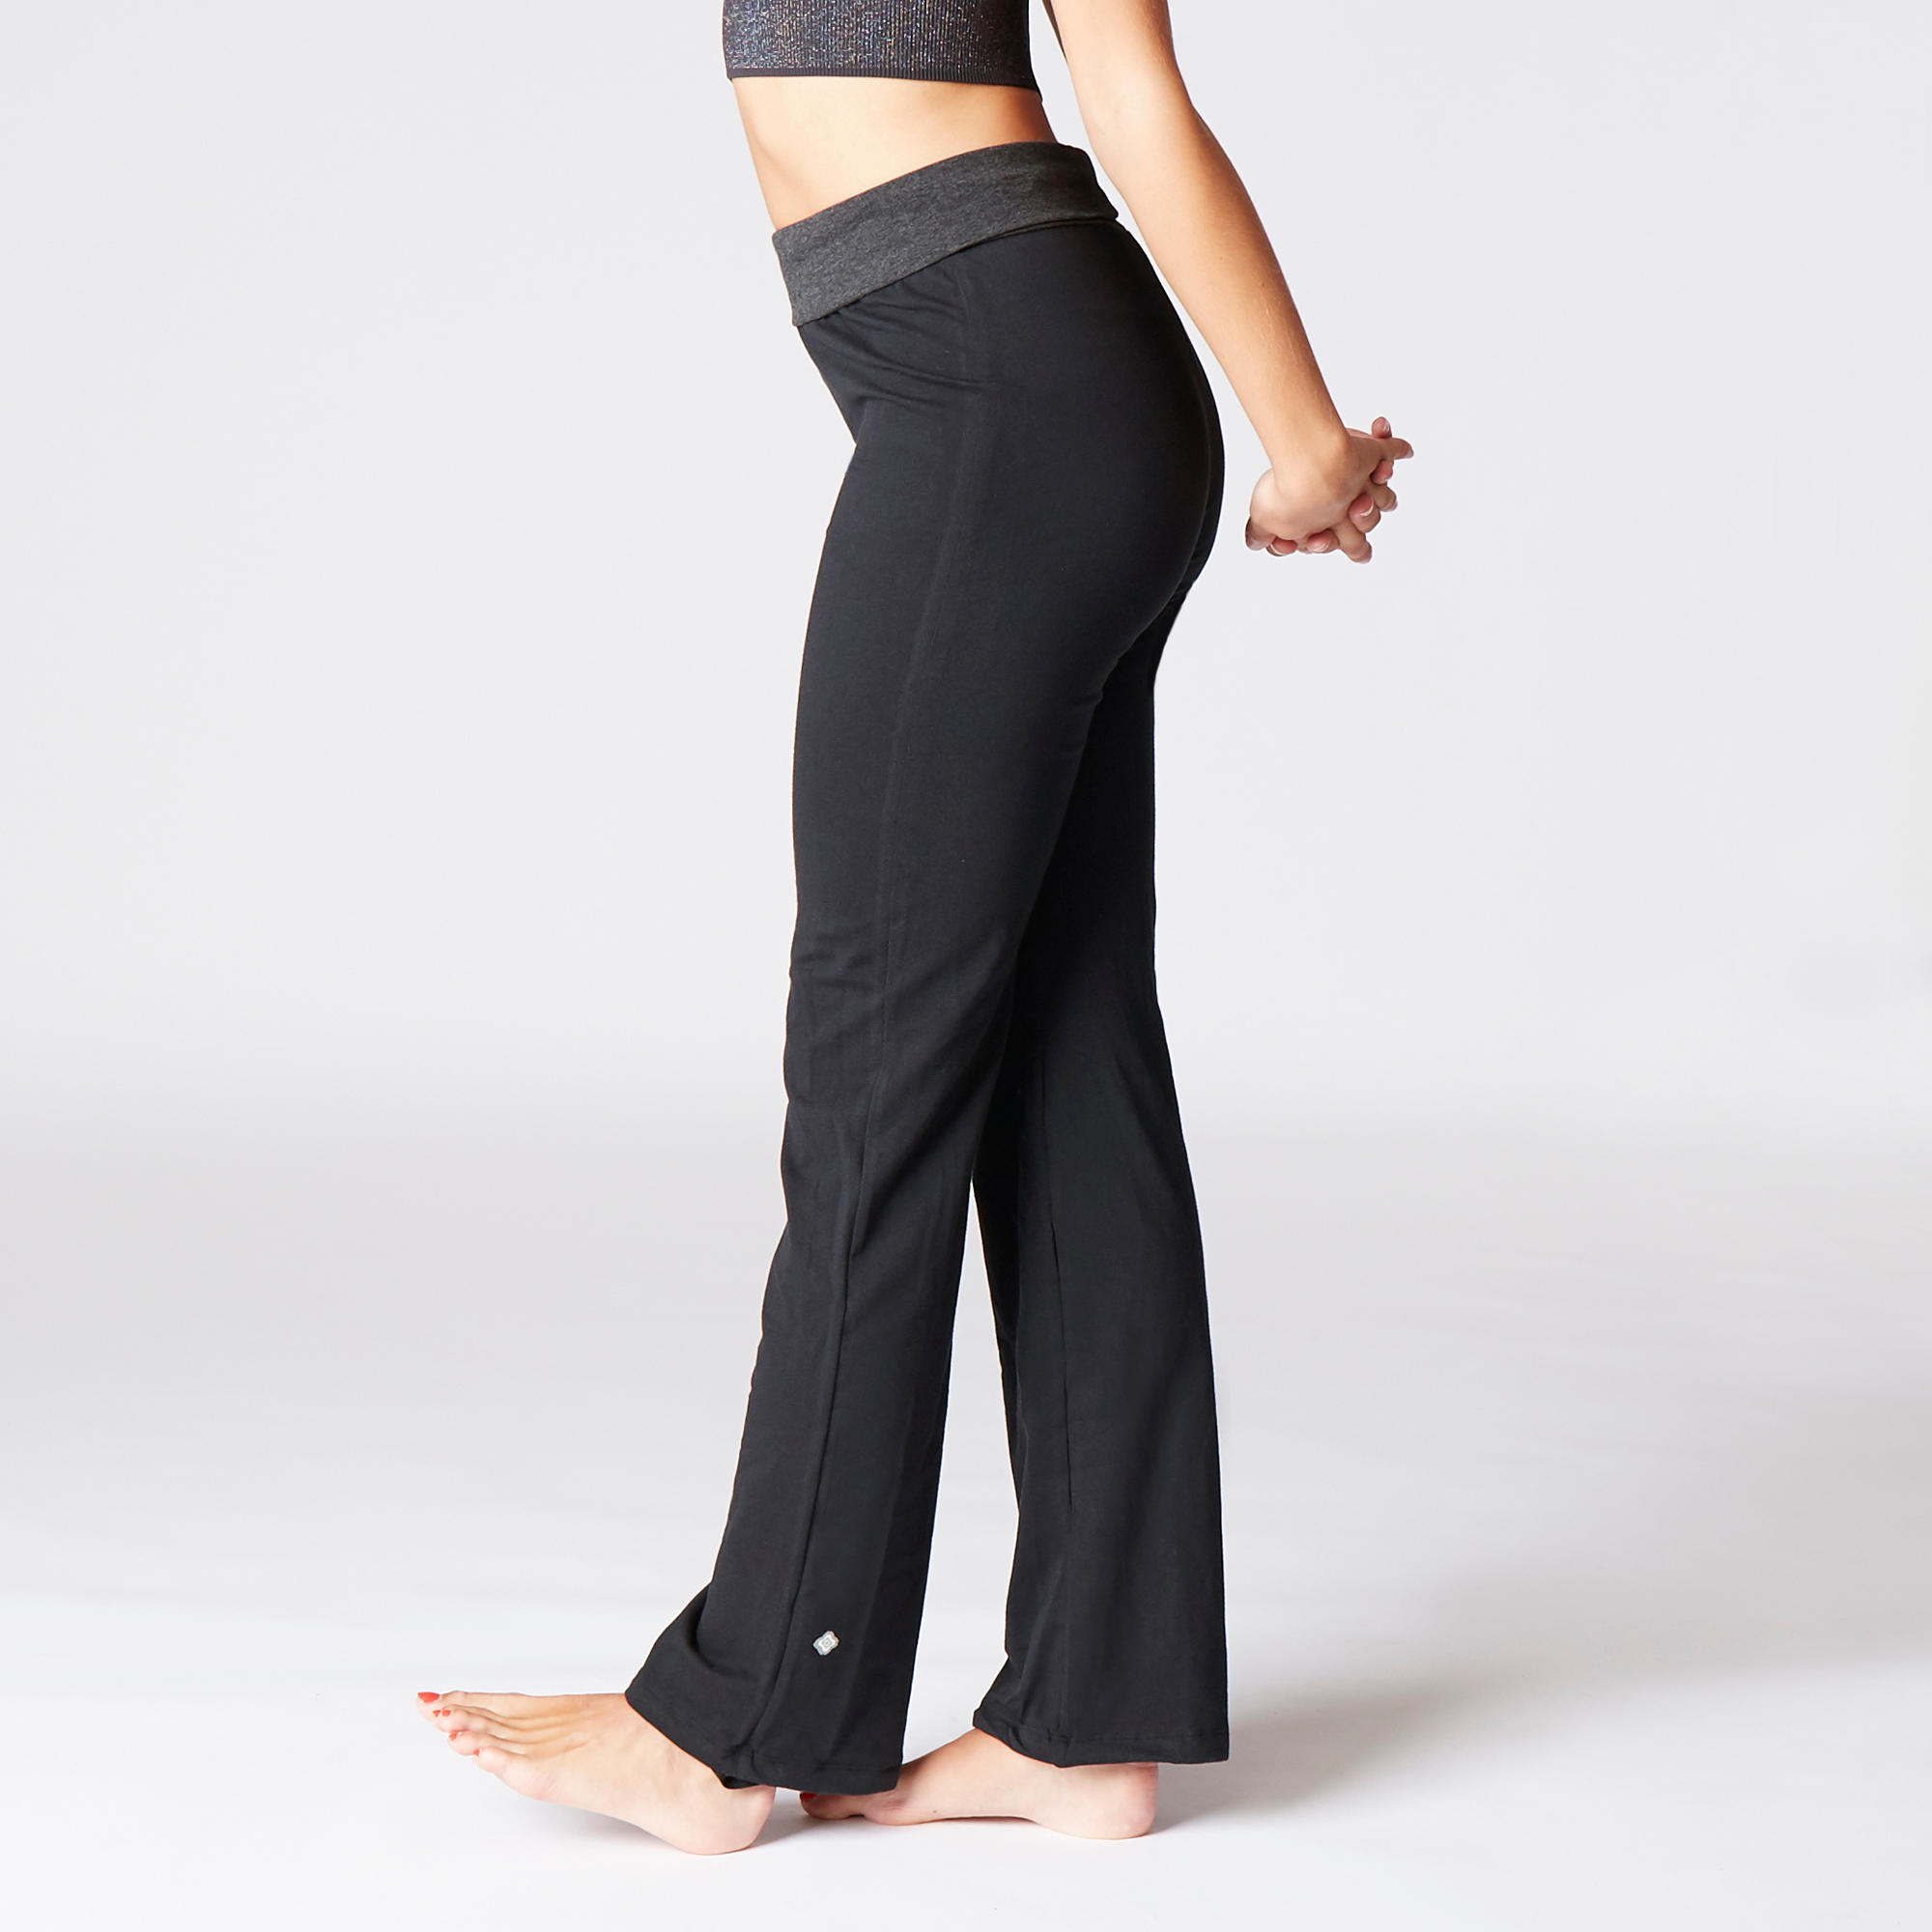 Women's Yoga Cotton Bottoms - Black/Grey 5/10